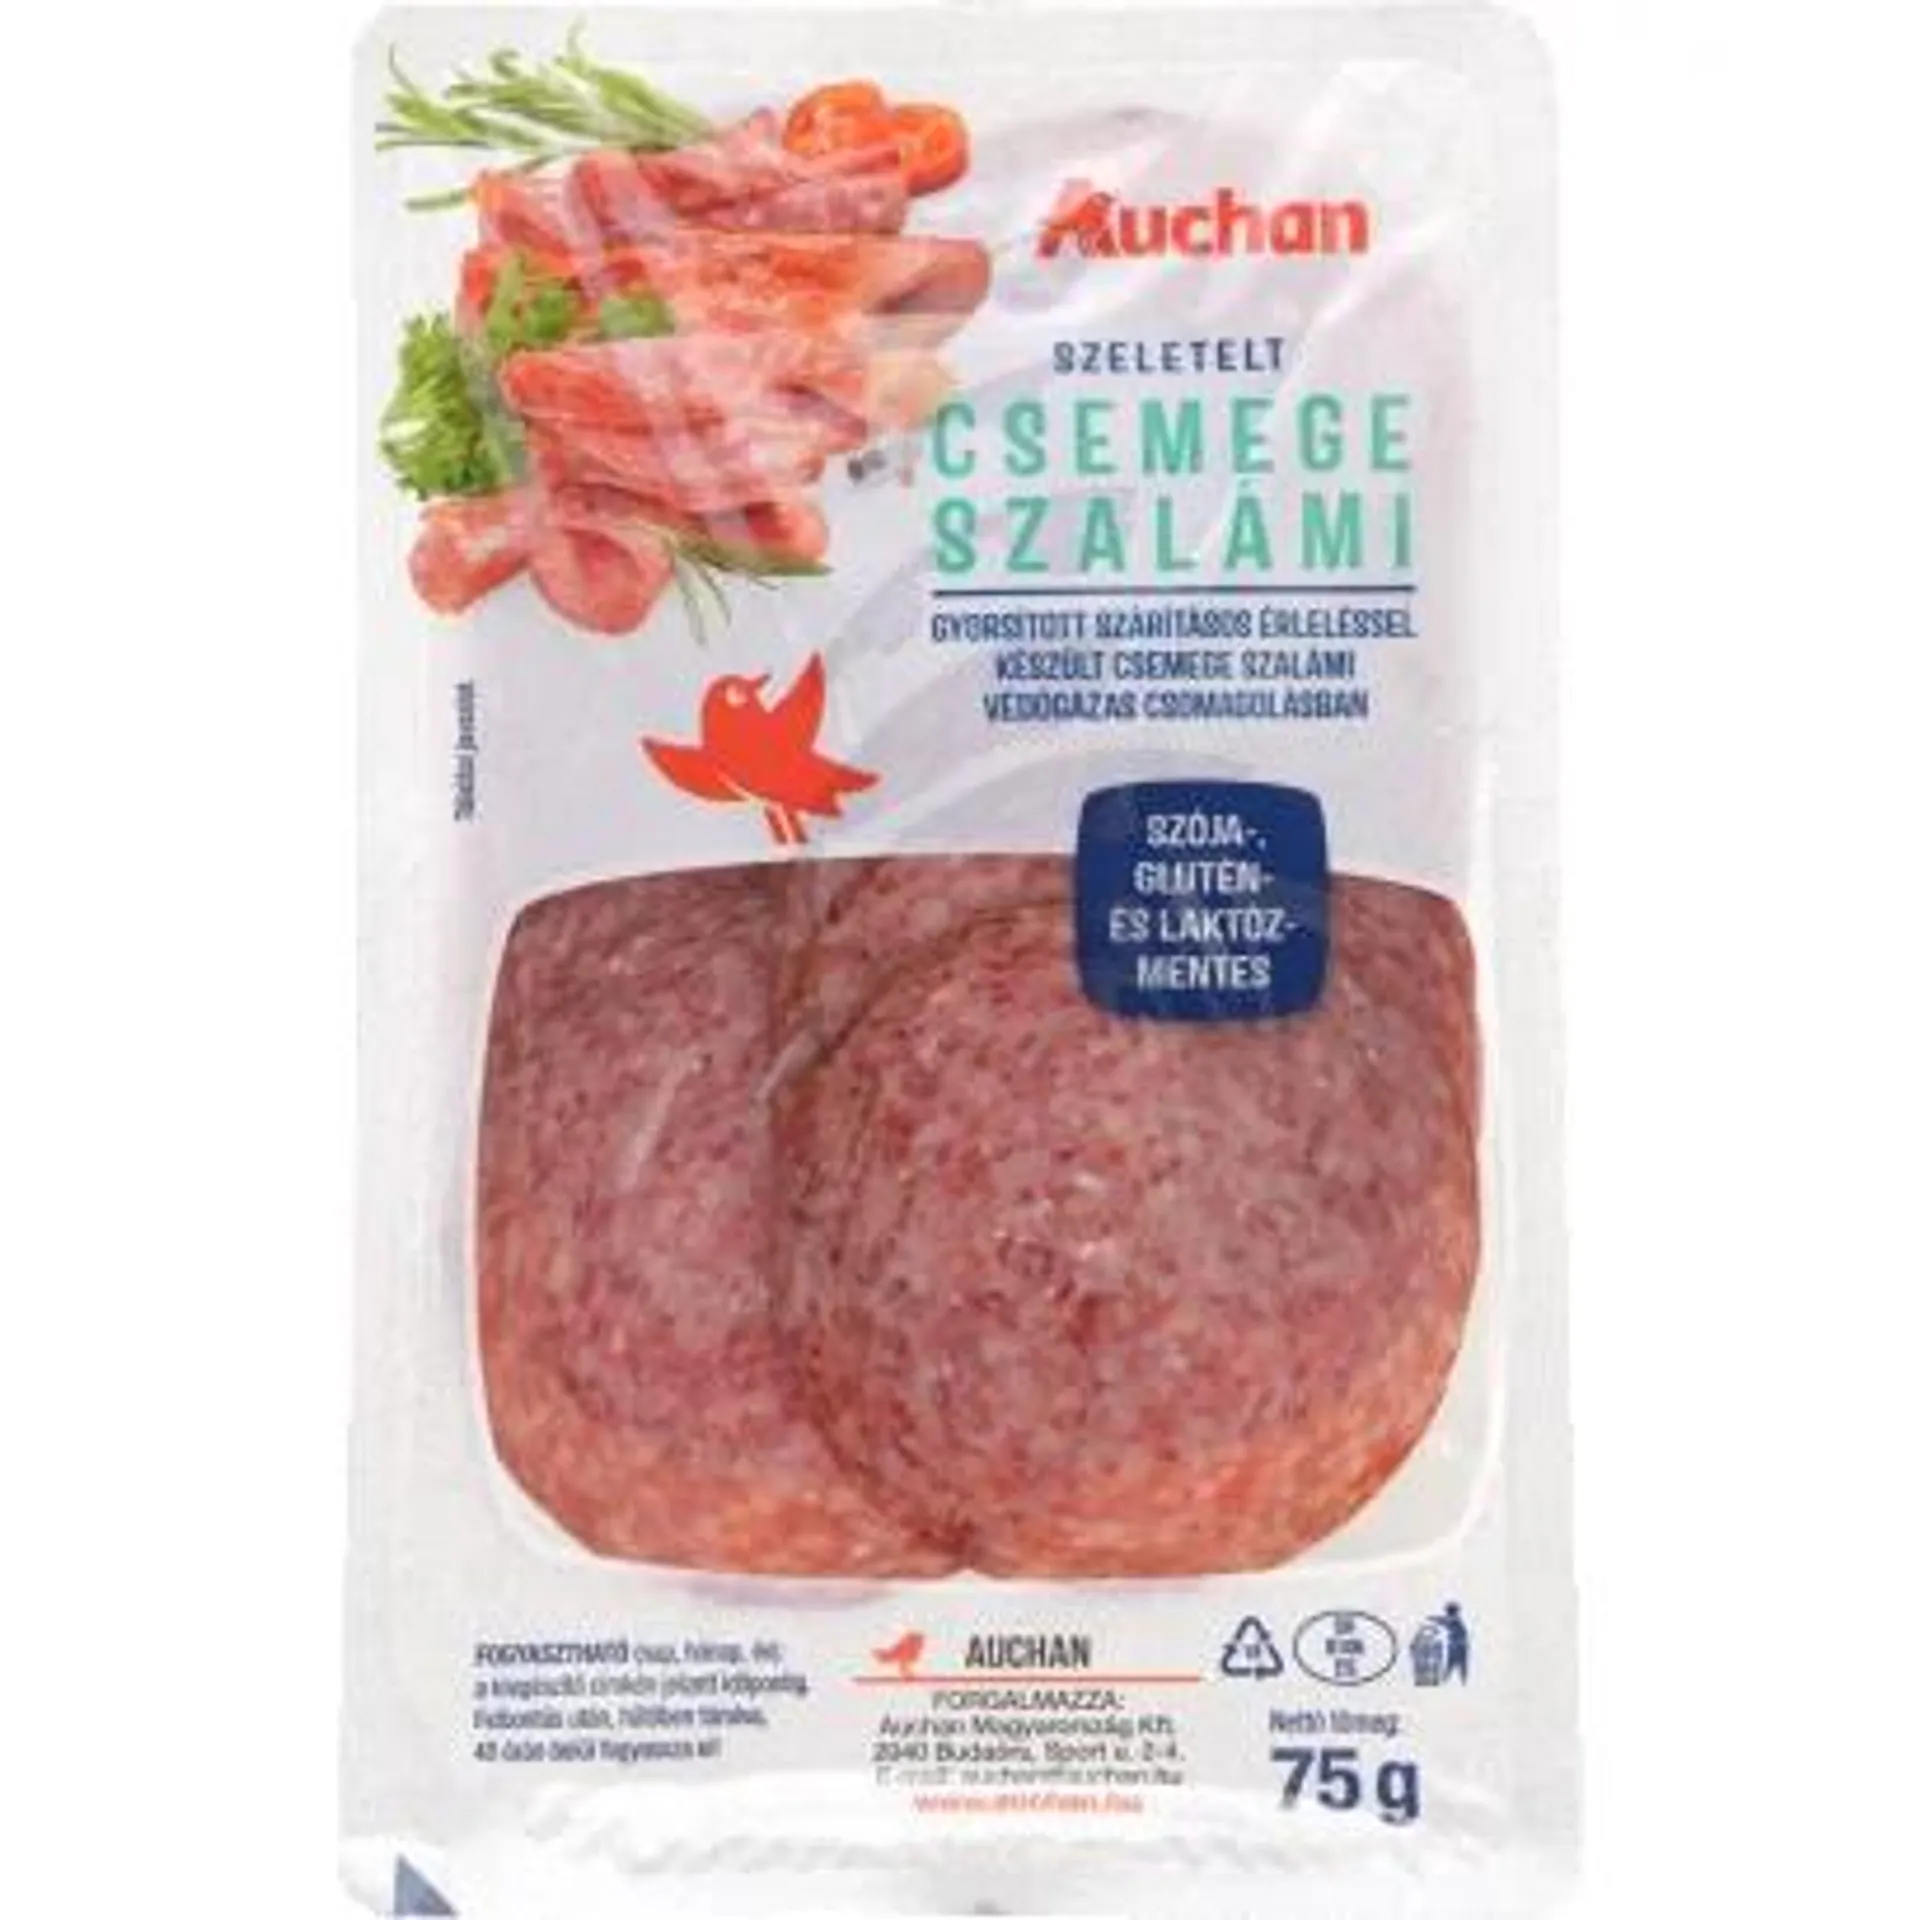 Auchan Favourite Delicate Salami 75g sliced